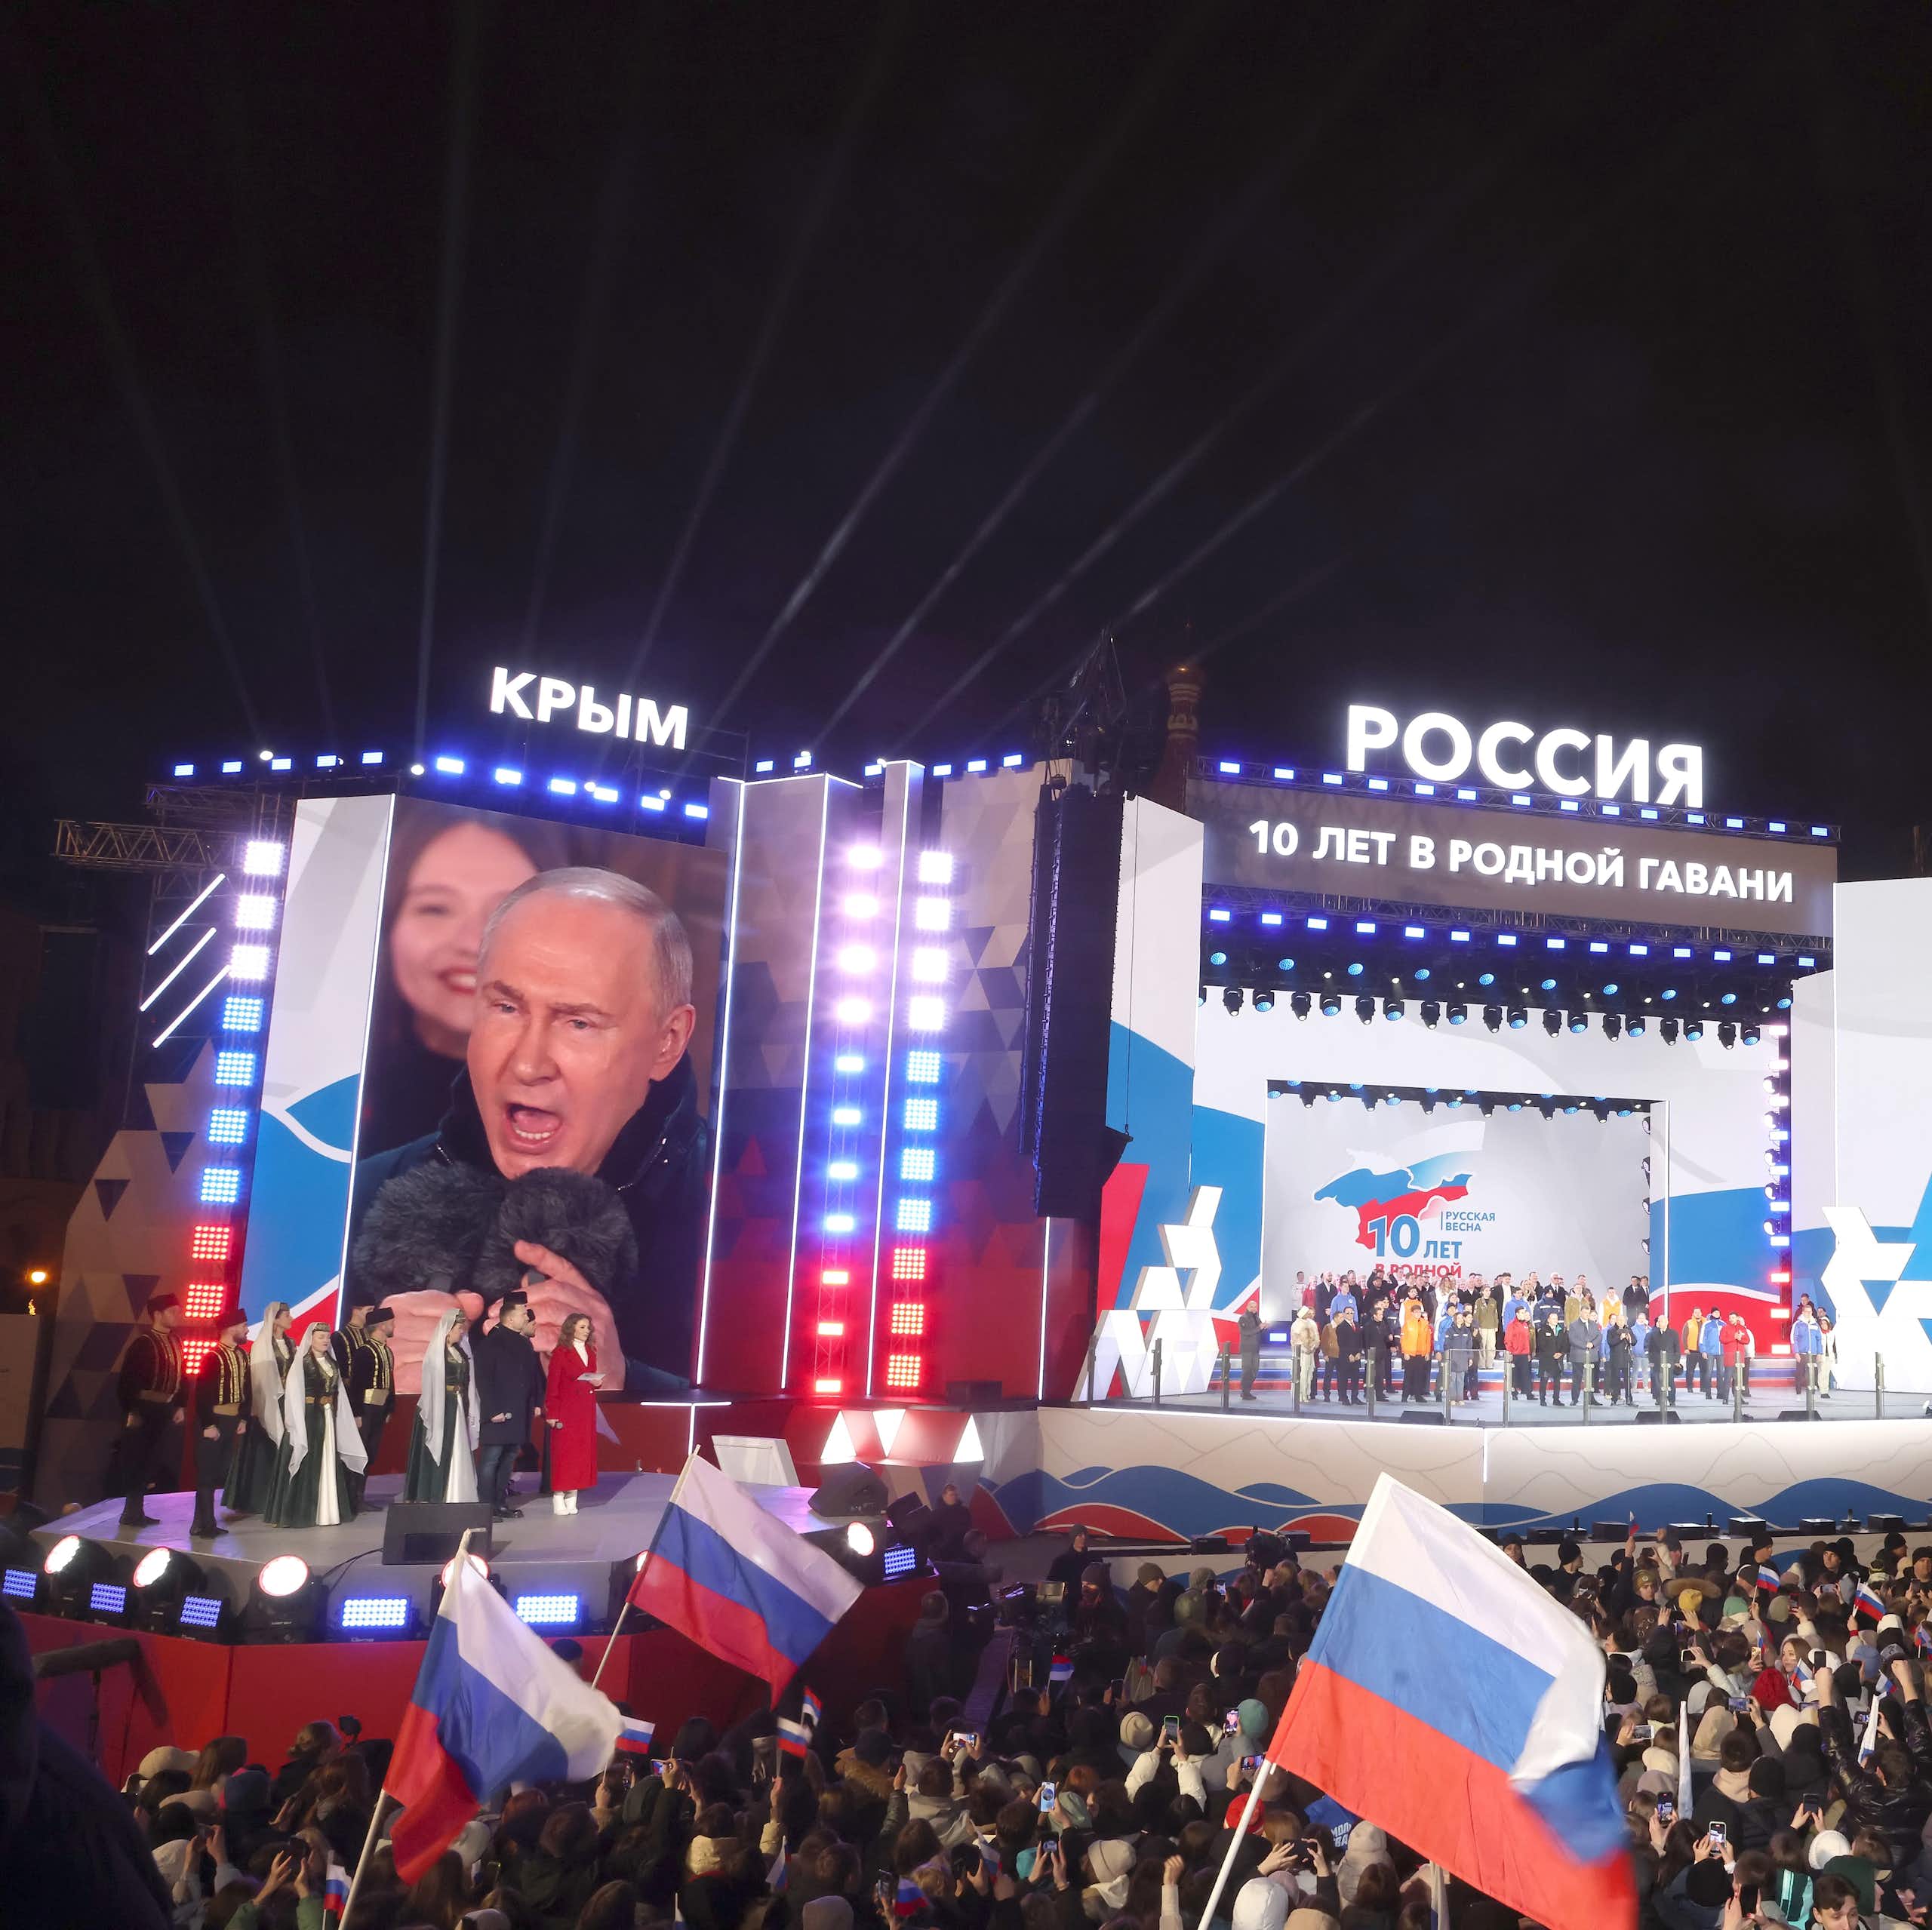 Vladimir Putin on a stage addressing a large crowd.